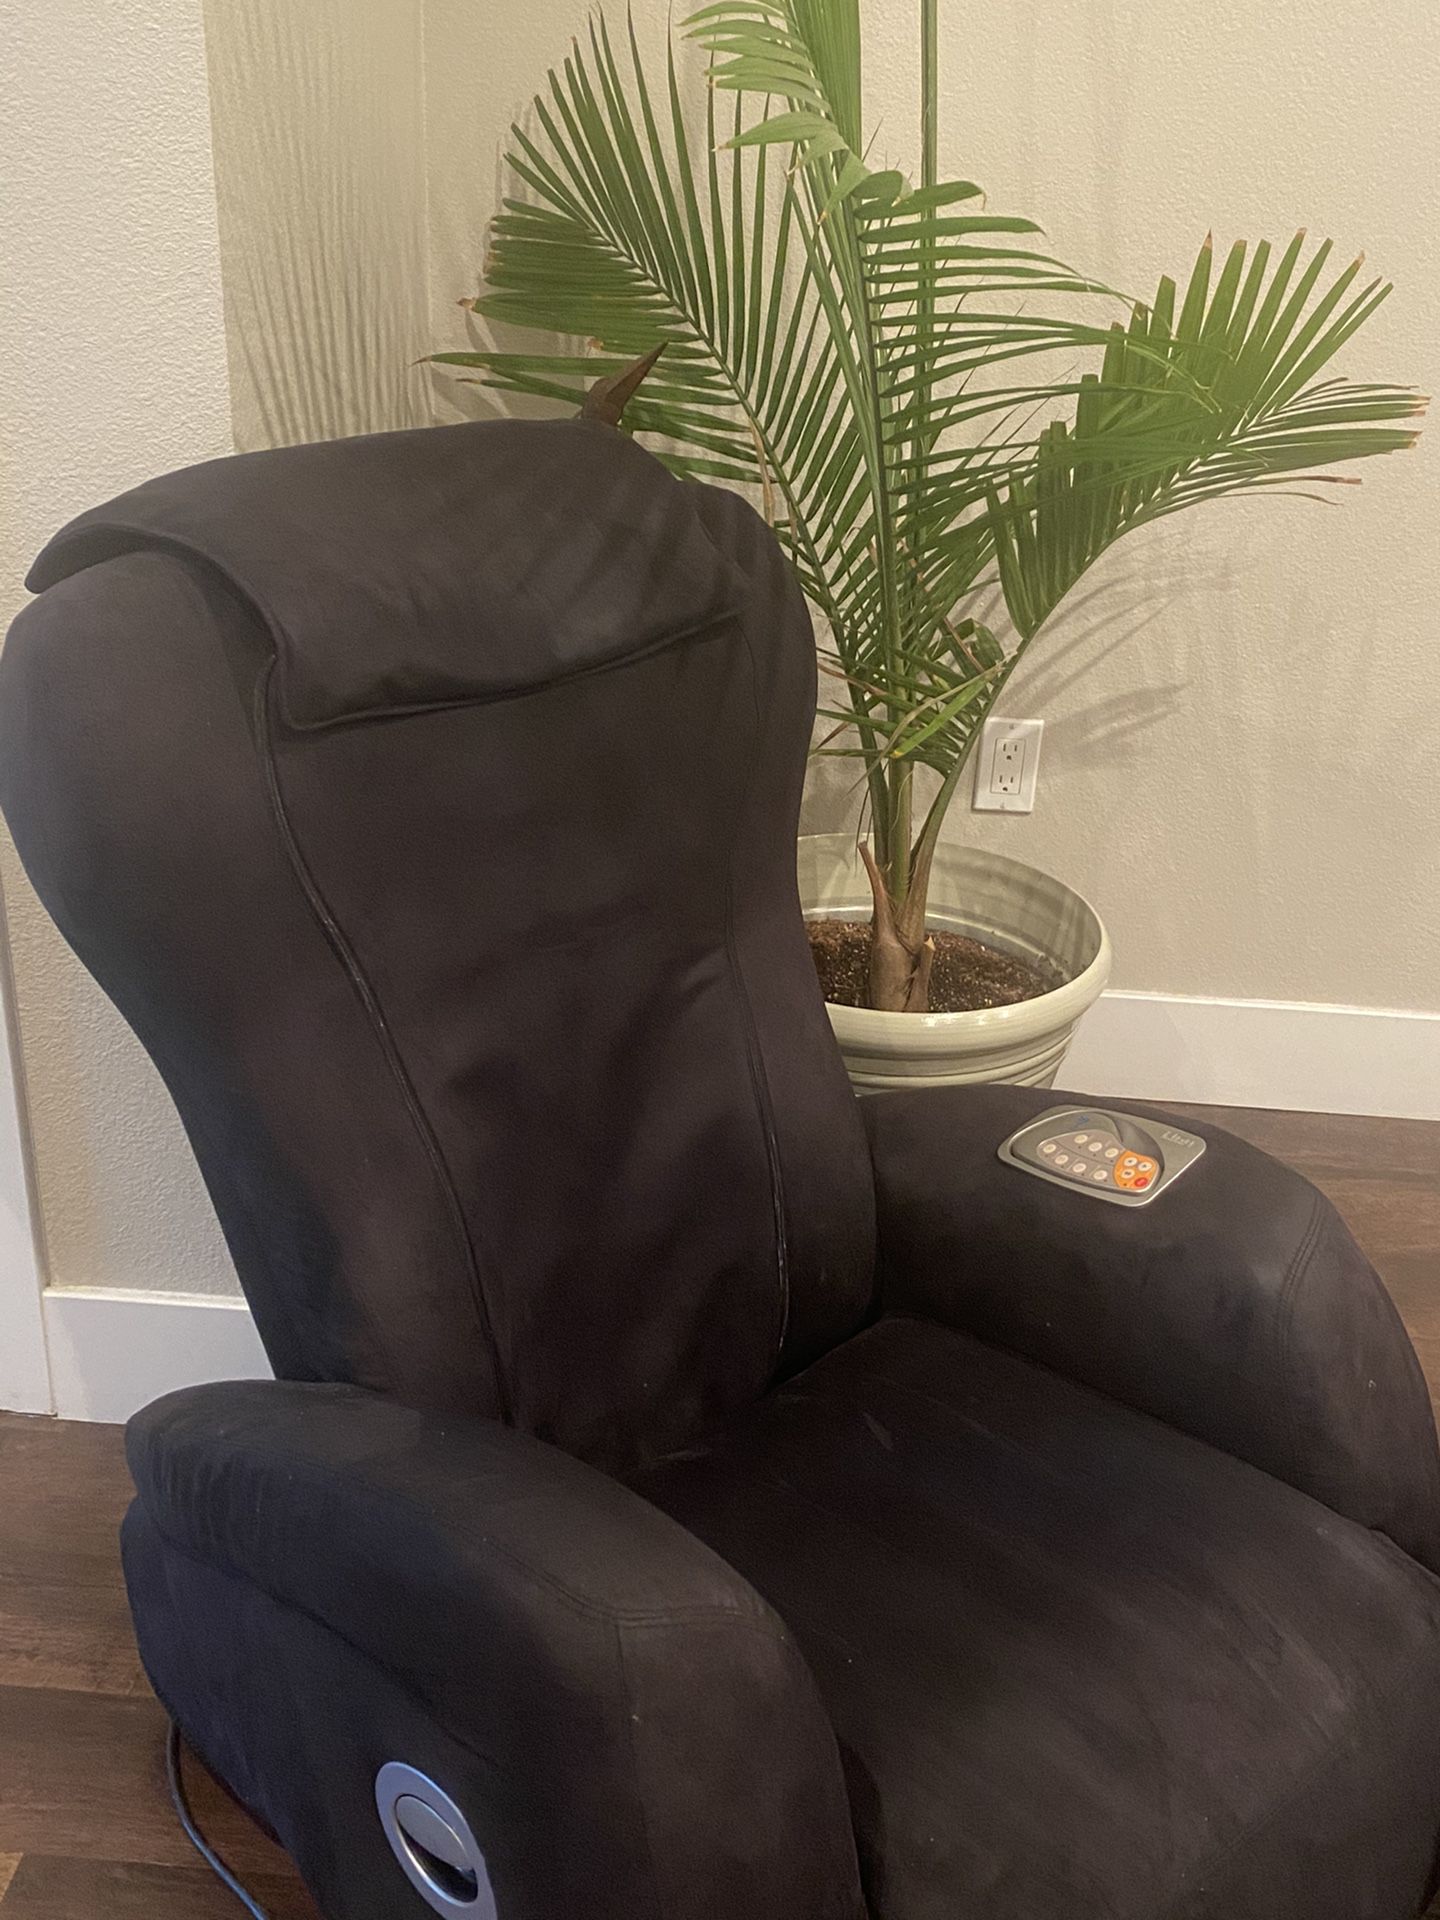 I Joy massage chair with ottoman